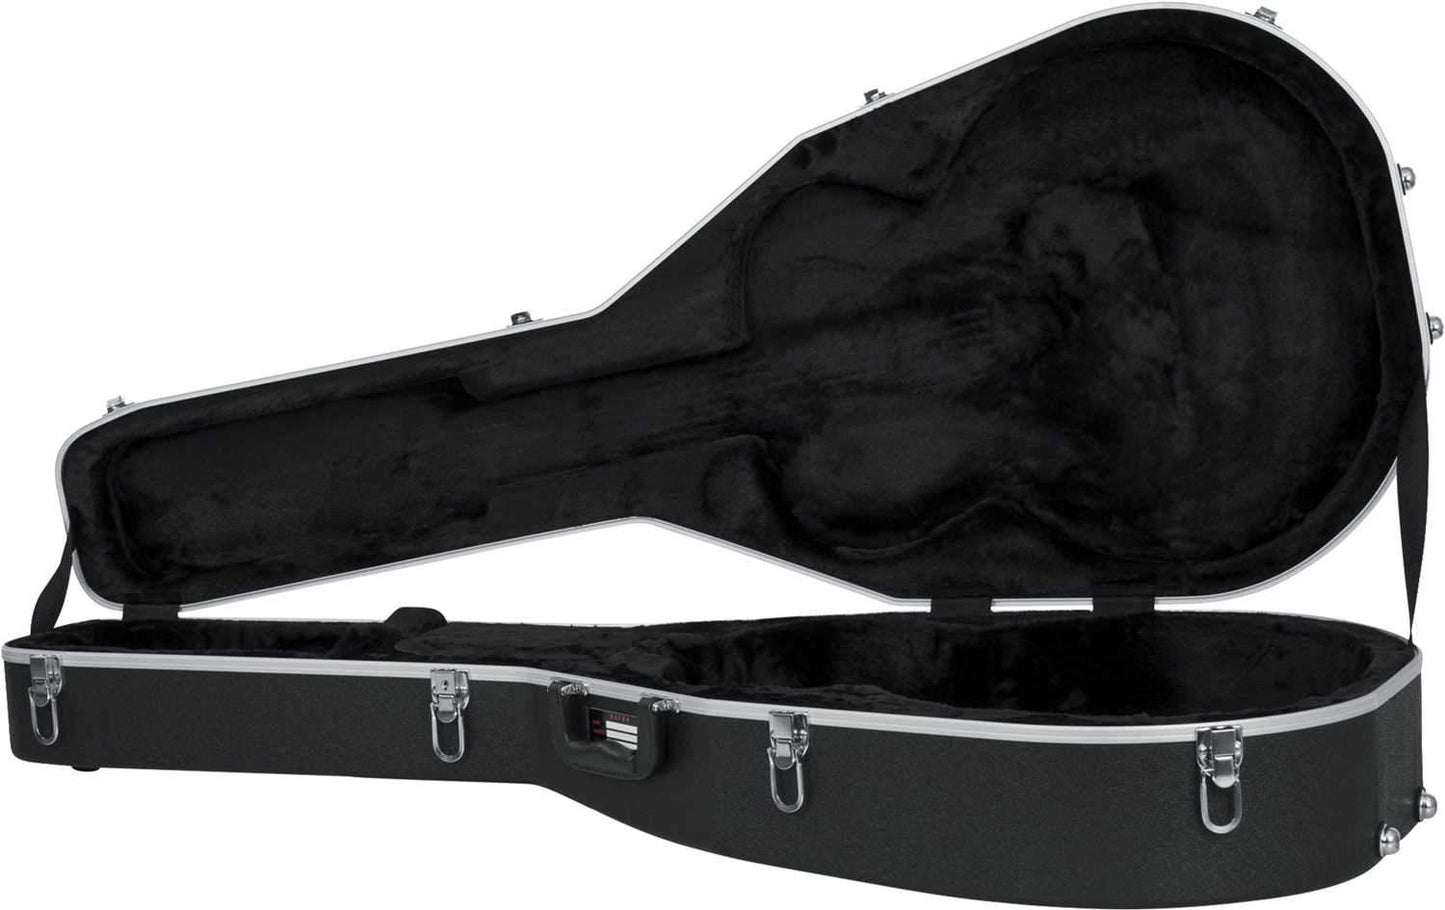 Gator GCJUMBO Jumbo Acoustic Guitar Case - ProSound and Stage Lighting